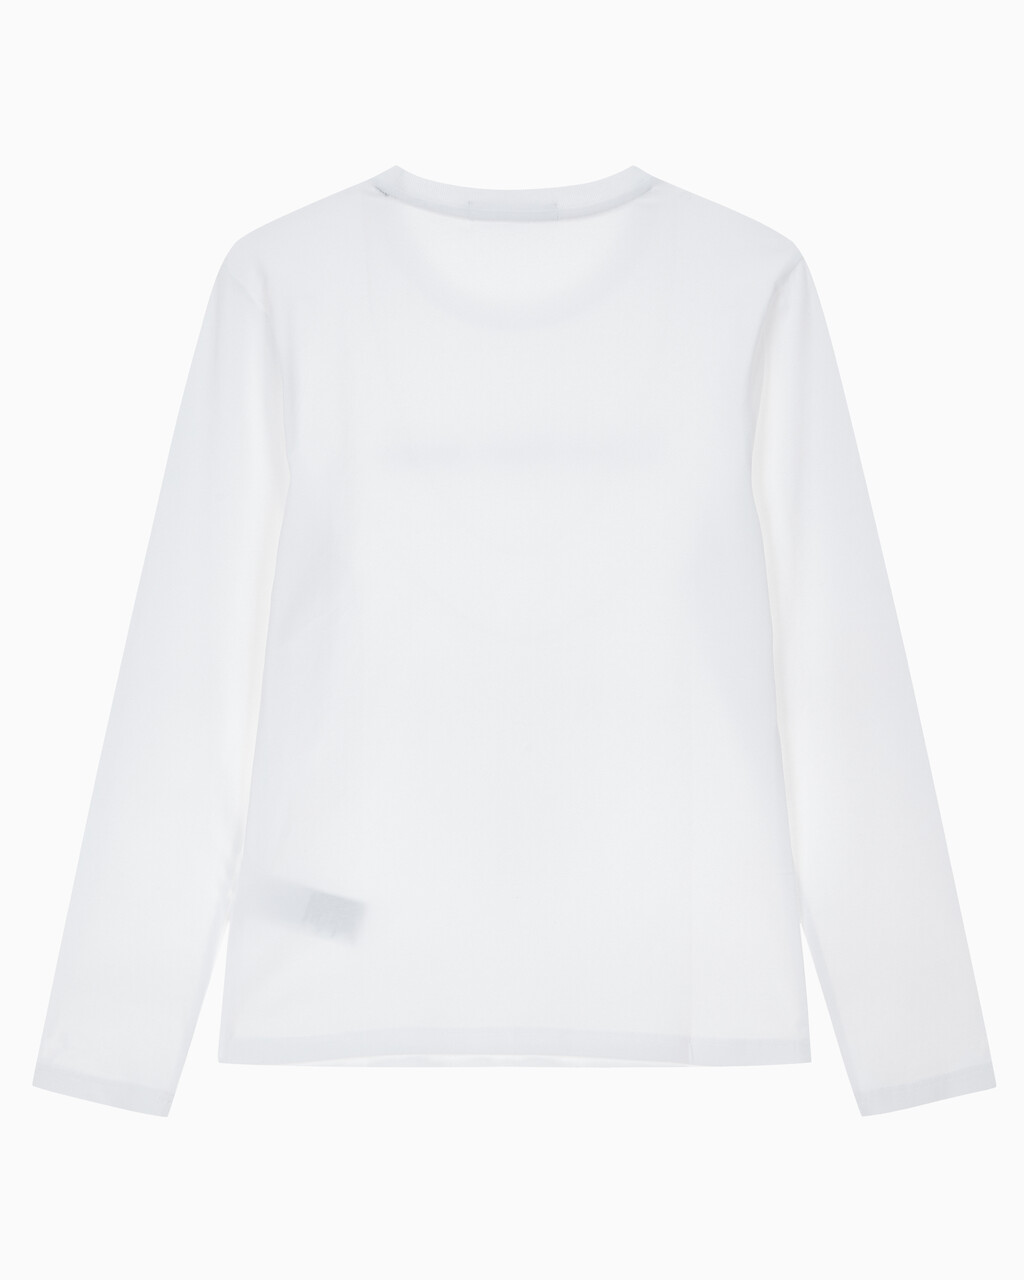 Buy 여성 슬림핏 인스티튜셔널 로고 긴팔 티셔츠 in color BRIGHT WHITE